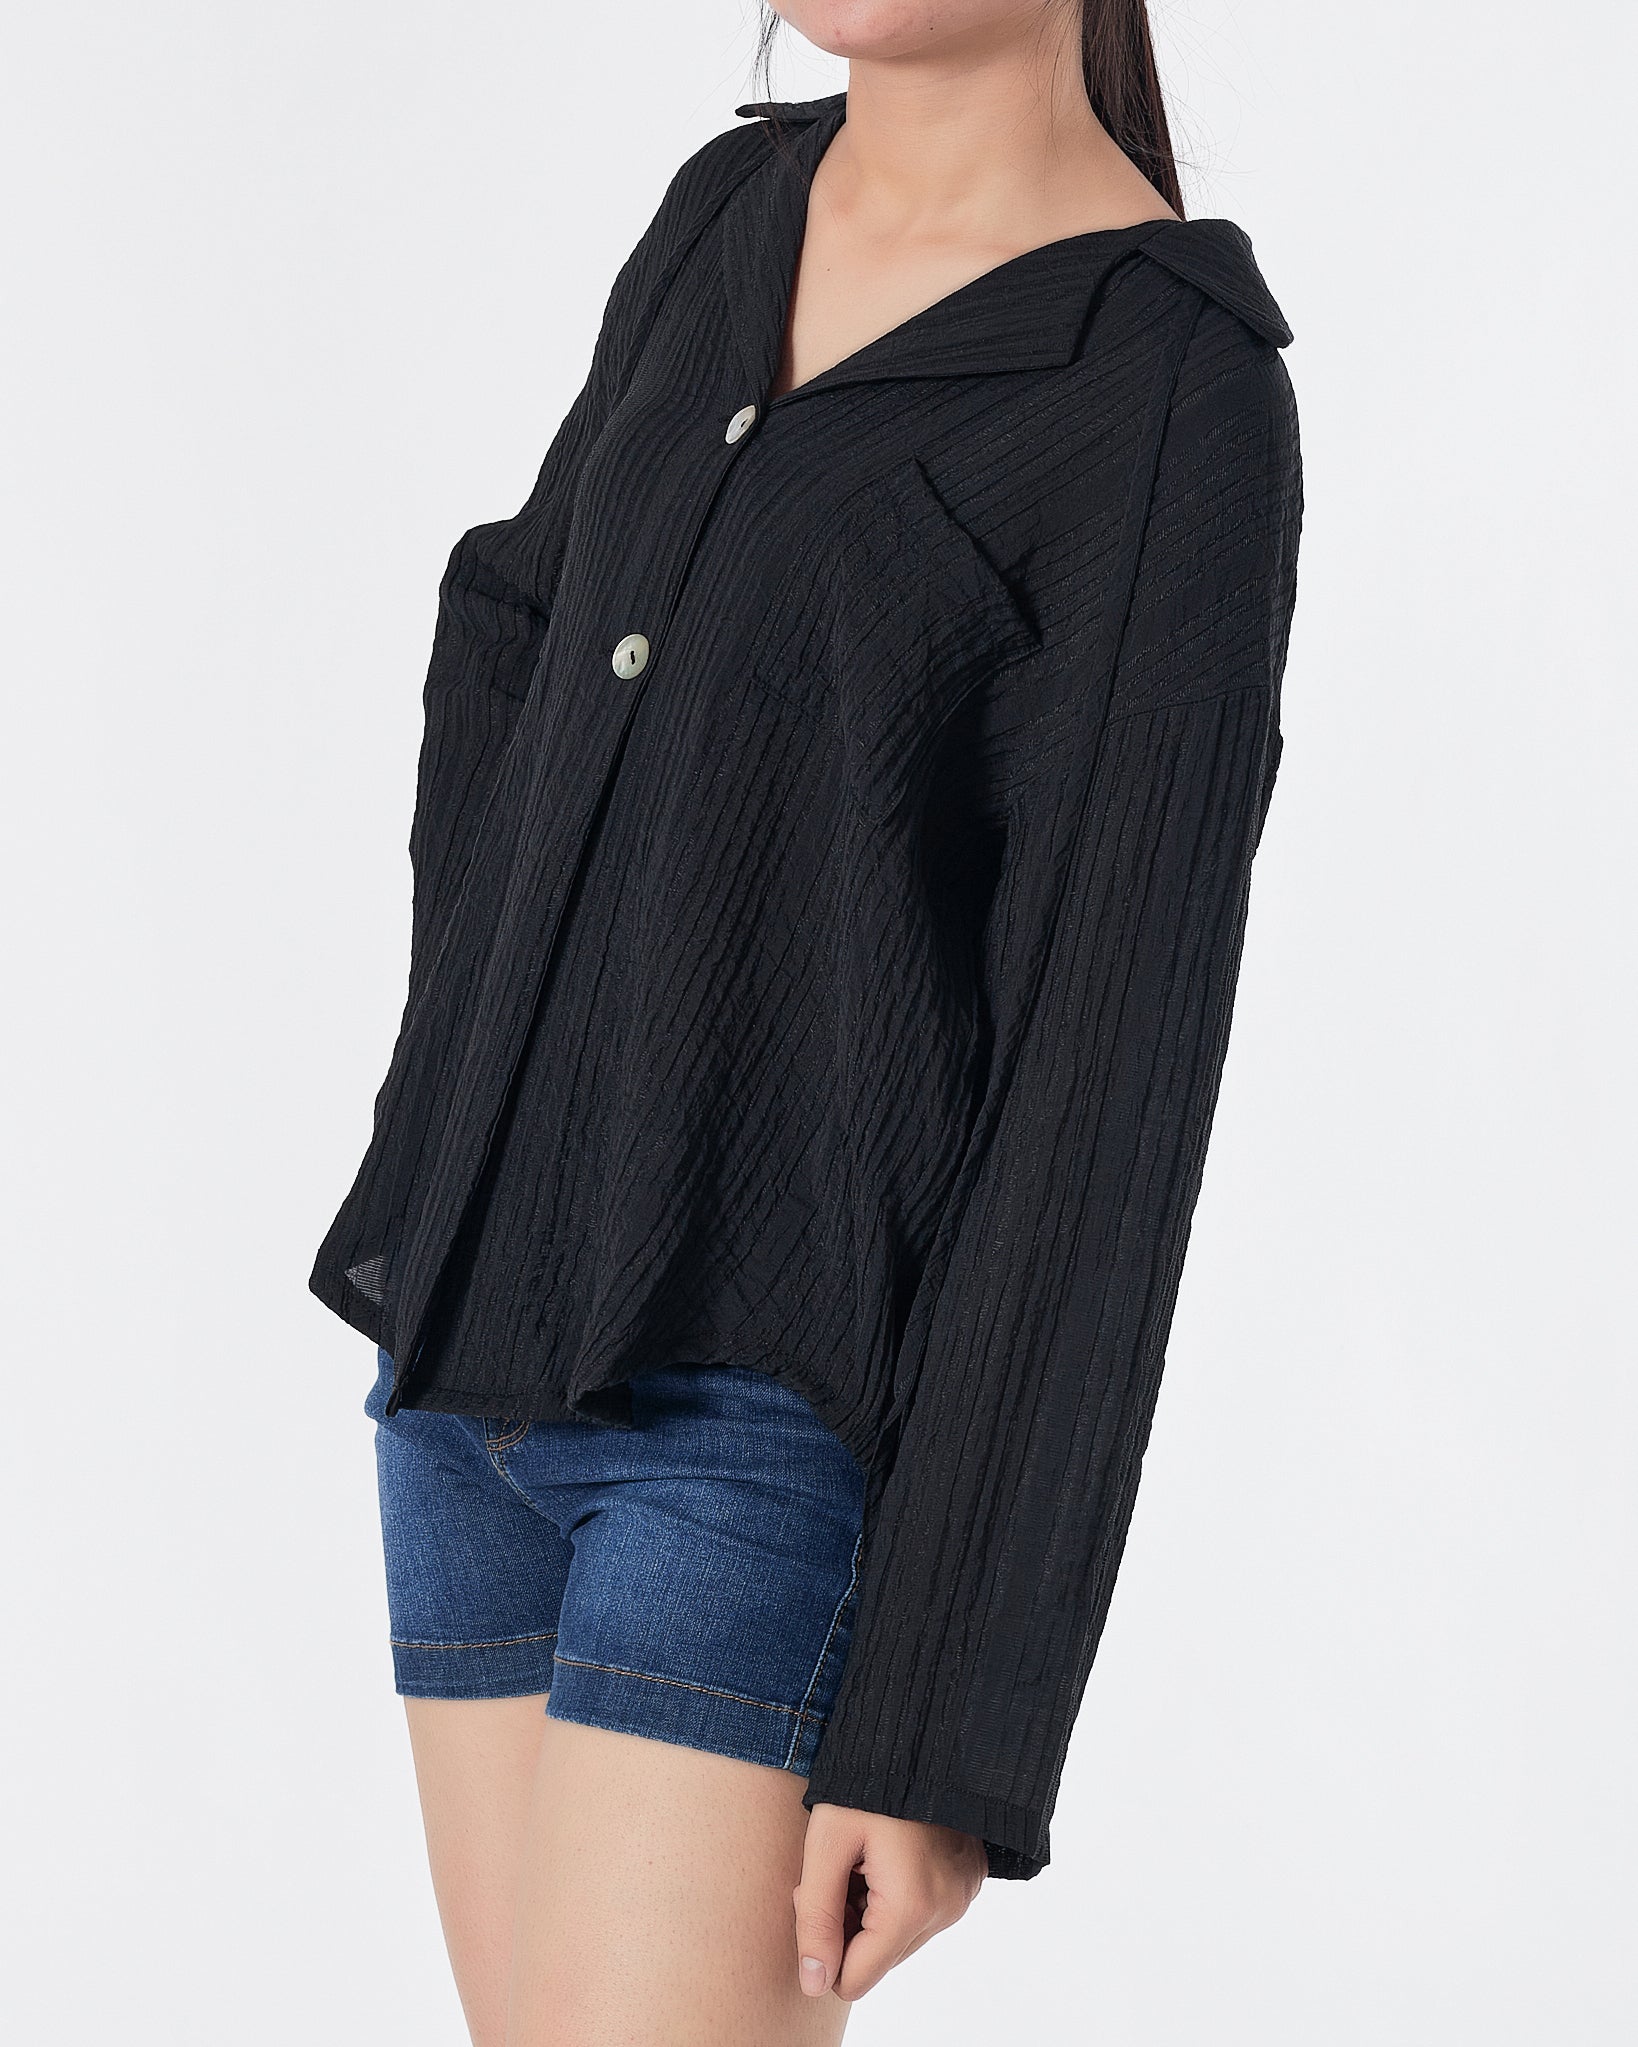 Plain Color Lady Black Shirts Long Sleeve 13.90